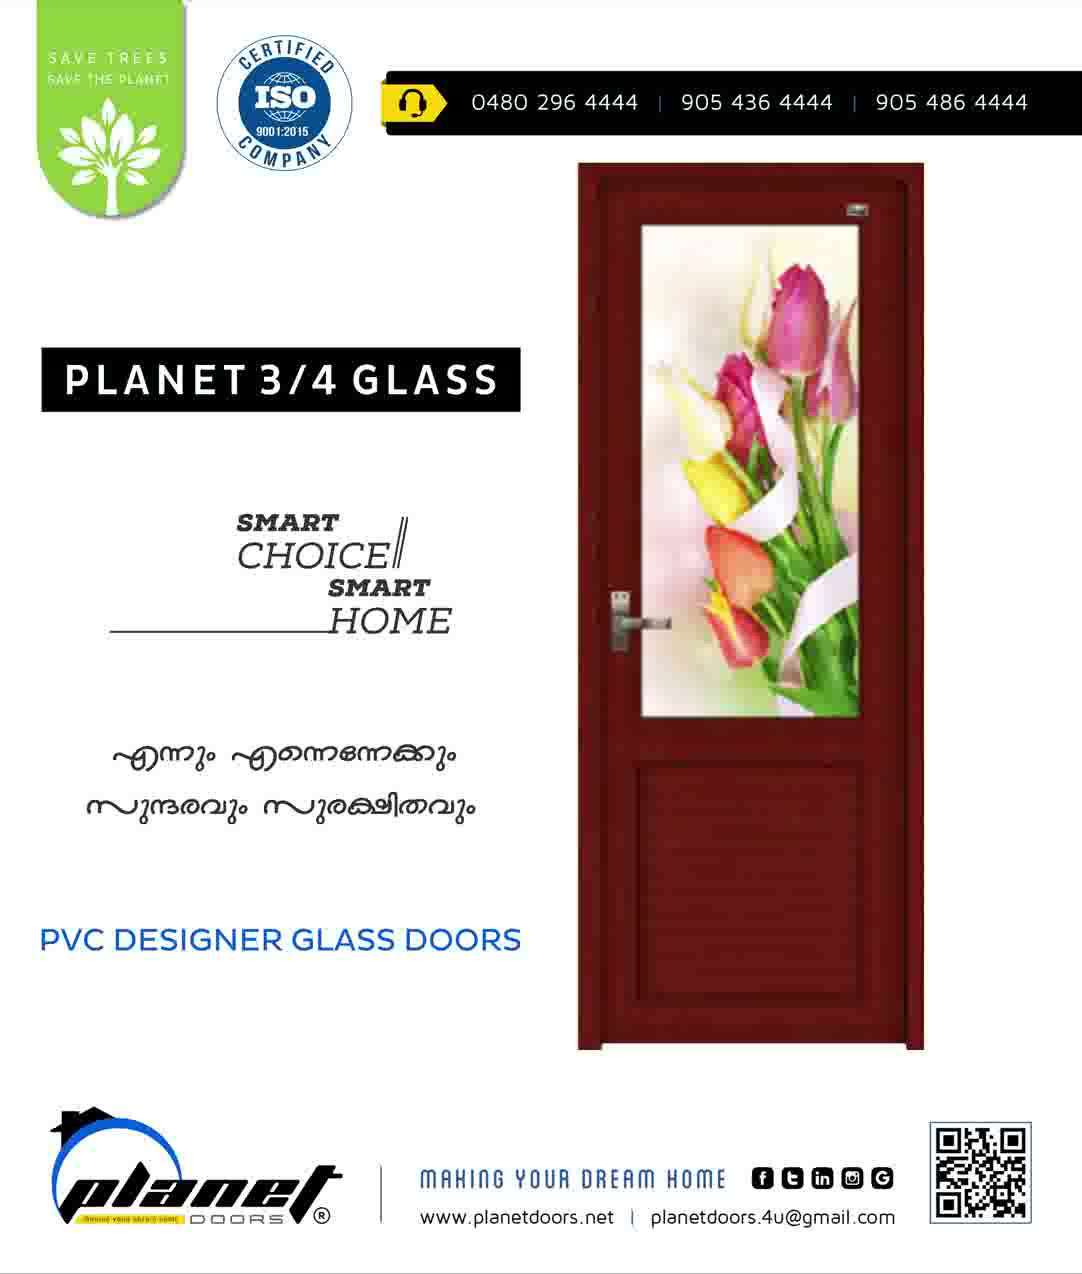 PLANET - PVC DESIGNER GLASS DOORS🚪

എന്നും എന്നെന്നേക്കും സുന്ദരവും സുരക്ഷിതവും.

/// SMART CHOICE, SMART HOME ///

PLANET 3/4 GLASS DOORS ✔️
PLANET KIDS ROOM DOORS ✔️
PLANET PRAYER ROOM DOORS ✔️
PLANET FULL LOUVER DOORS (FLD) ✔️
PLANET BLACK & WHITE DOORS (BWD) ✔️
PLANET PRINTED STRIP DOORS (PSD) ✔️
PLANET CHECK ART DOORS (CAD) ✔️
PLANET JAALI DESIGN DOORS (PJD) ✔️
PLANET MODERN DESIGN DOORS (MDD) ✔️
PLANET EXECUTIVE DESIGN DOORS (EDD) ✔️

"All DESIGNS ARE AVAILABLE IN ALL COLOURS"

കേരളത്തിലുടനീളം വിതരണ ശൃംഖലയും വില്പനാനന്തര സേവനവും. 

👉 https://wa.me/919054364444 - https://wa.me/919054864444.

👉 വിളിക്കൂ...📞 04802964444 📱 9054364444 📱 9054864444.





#planetdoors #thrissur #kerala 

#doors #pvc #upvc #frp #skindoors #wood #panel #steeldoors #designerglassdoors #home #interior #furniture